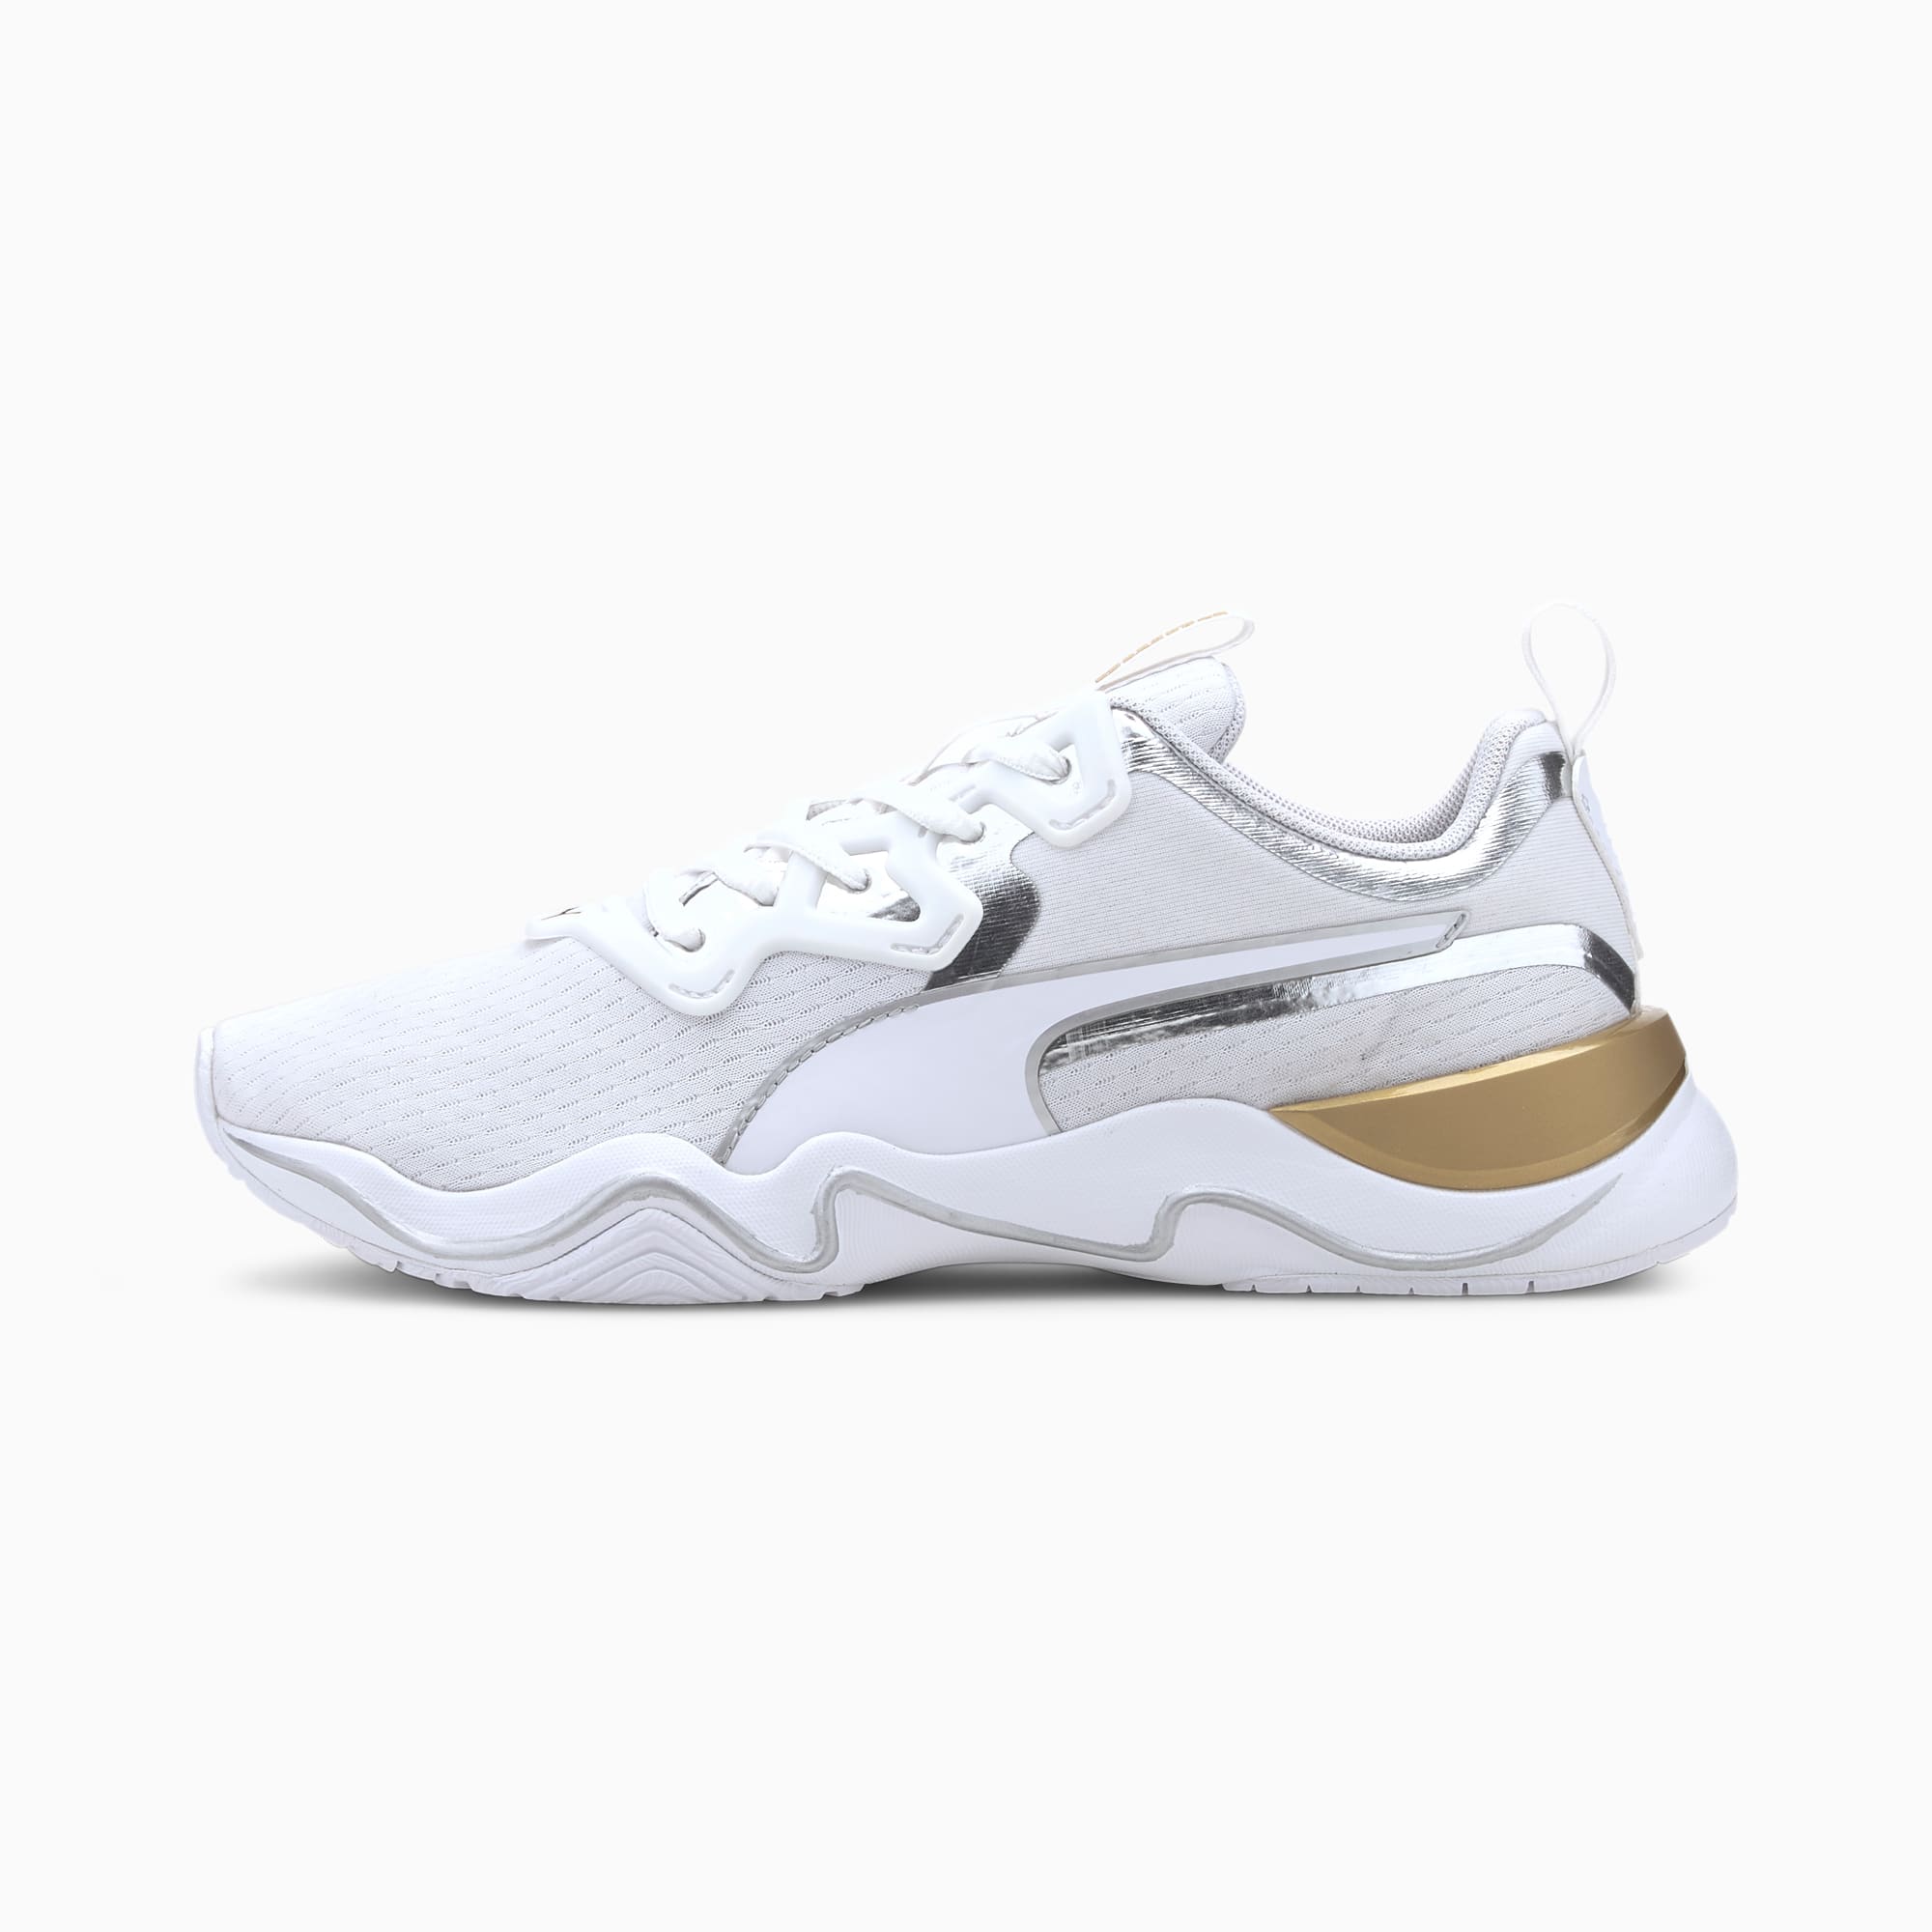 puma shoes white gold